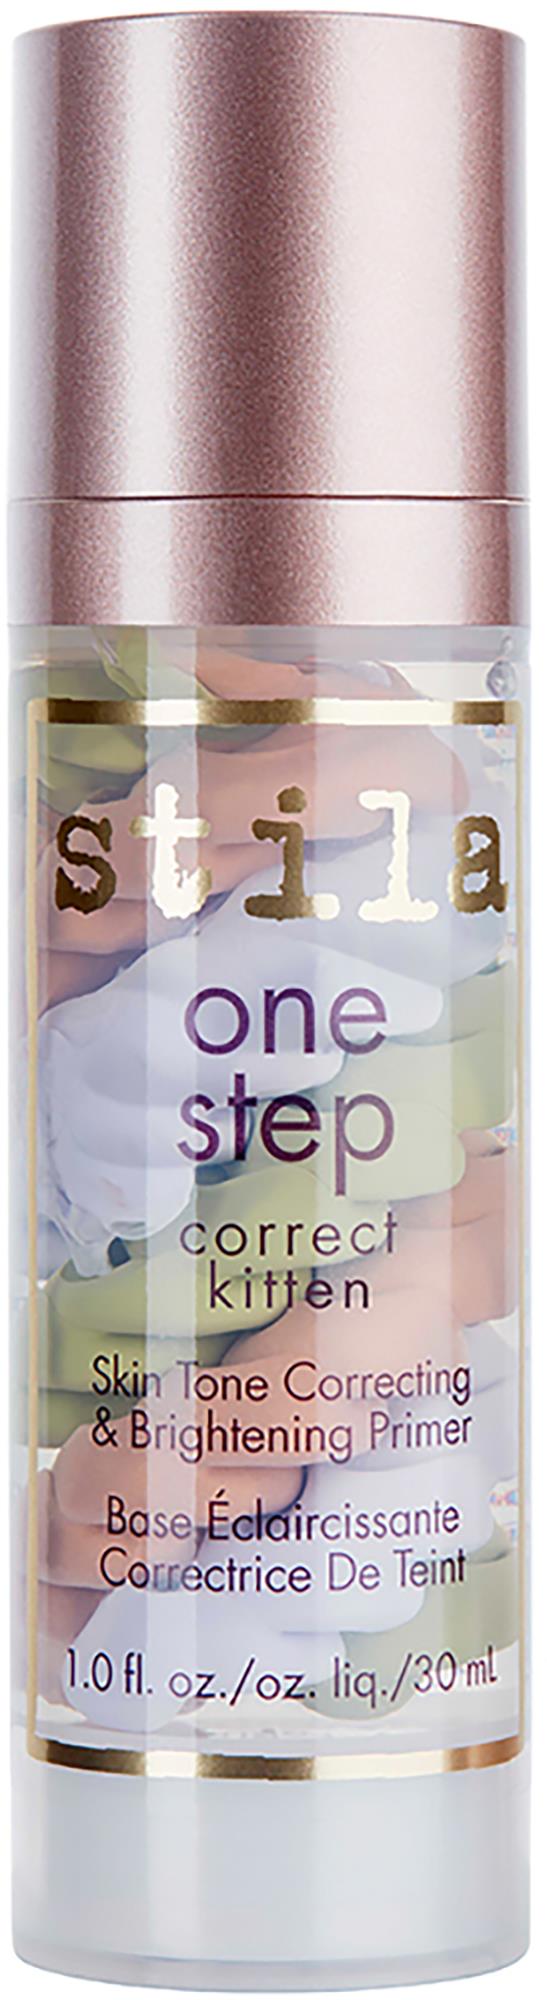 One Step Correct - stila